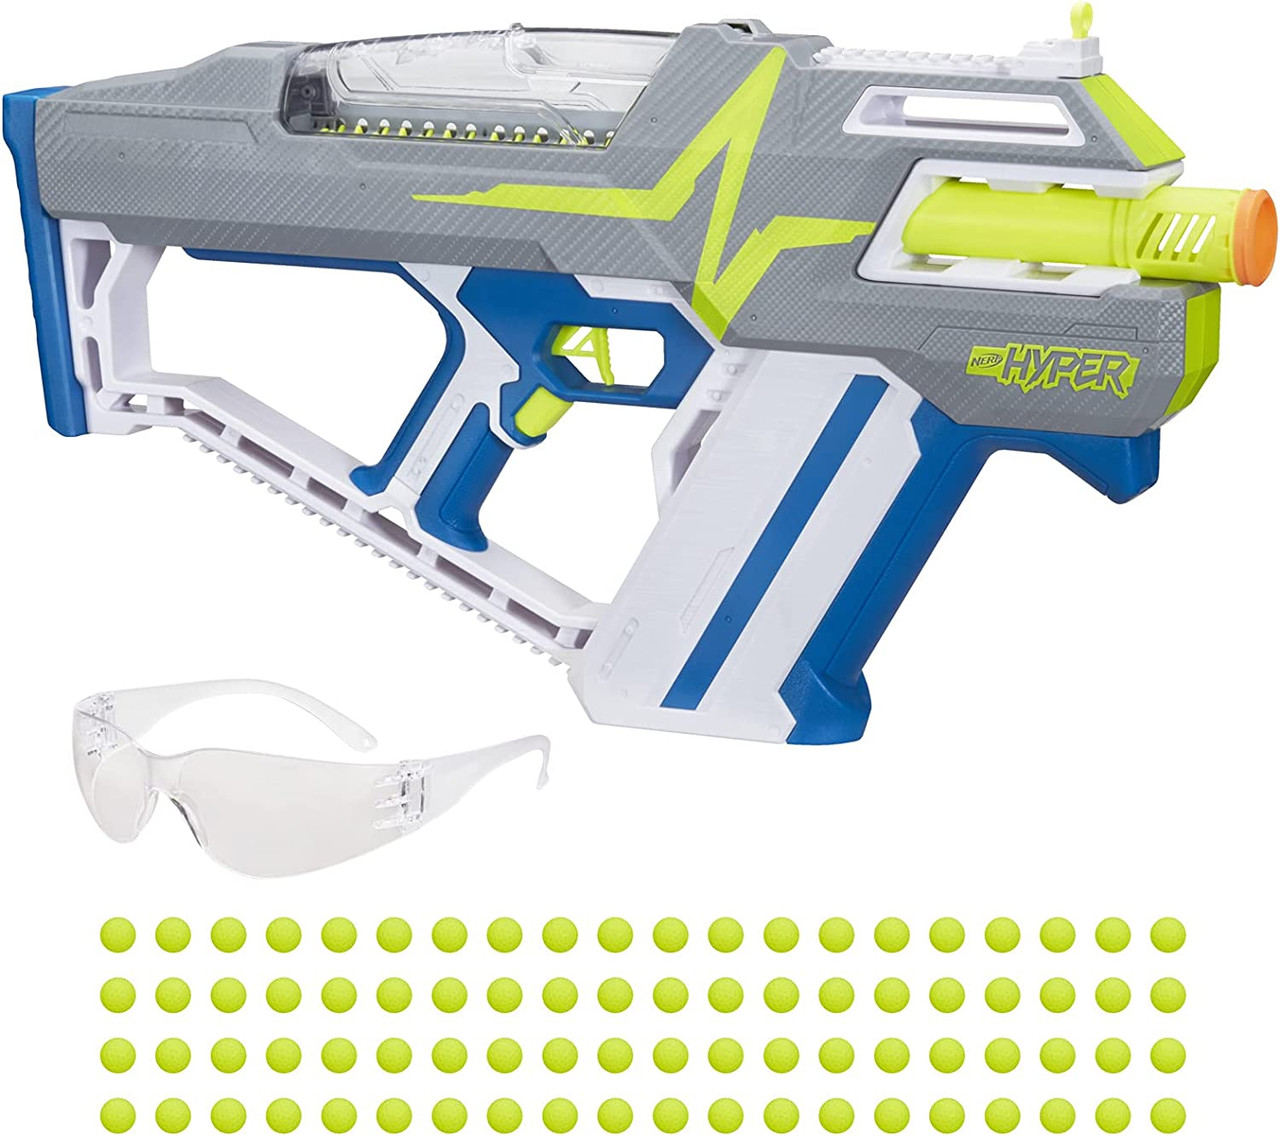 Nerf Hyper-Fire Pistol Blue